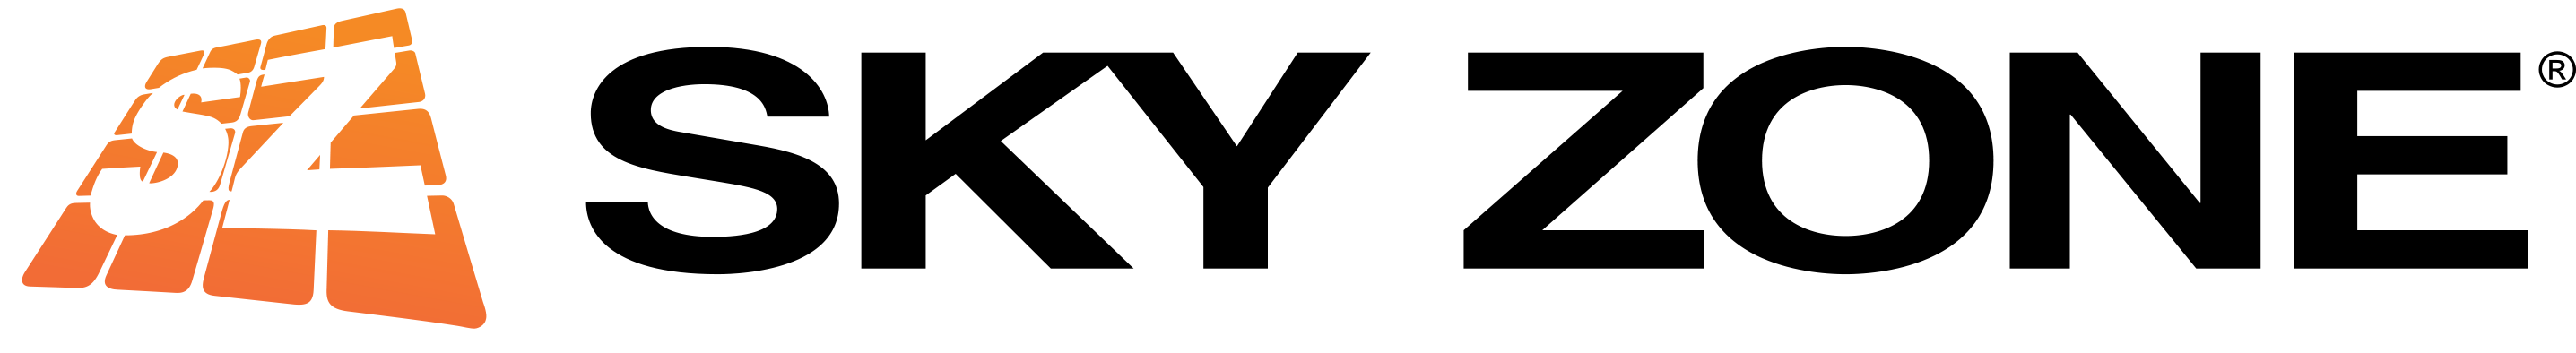 Sky Zone Whitby logo